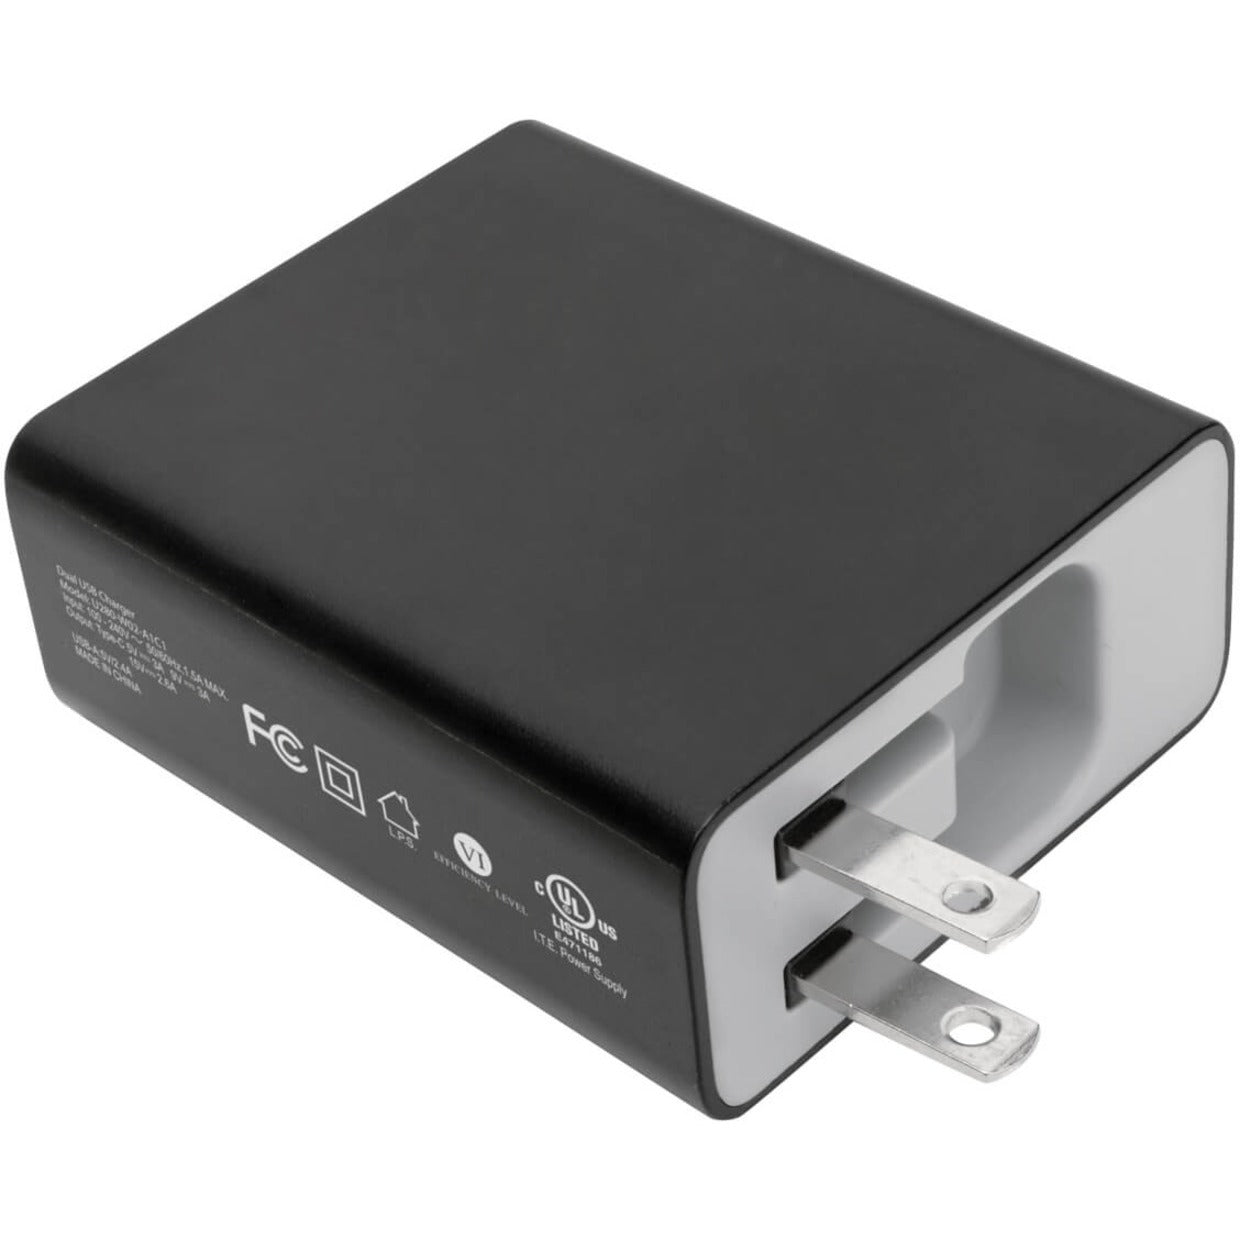 Tripp Lite U280-W02-A1C1 AC Adapter 2PT USB Wall Charger with USB Type C 51W Power 2 Year Warranty